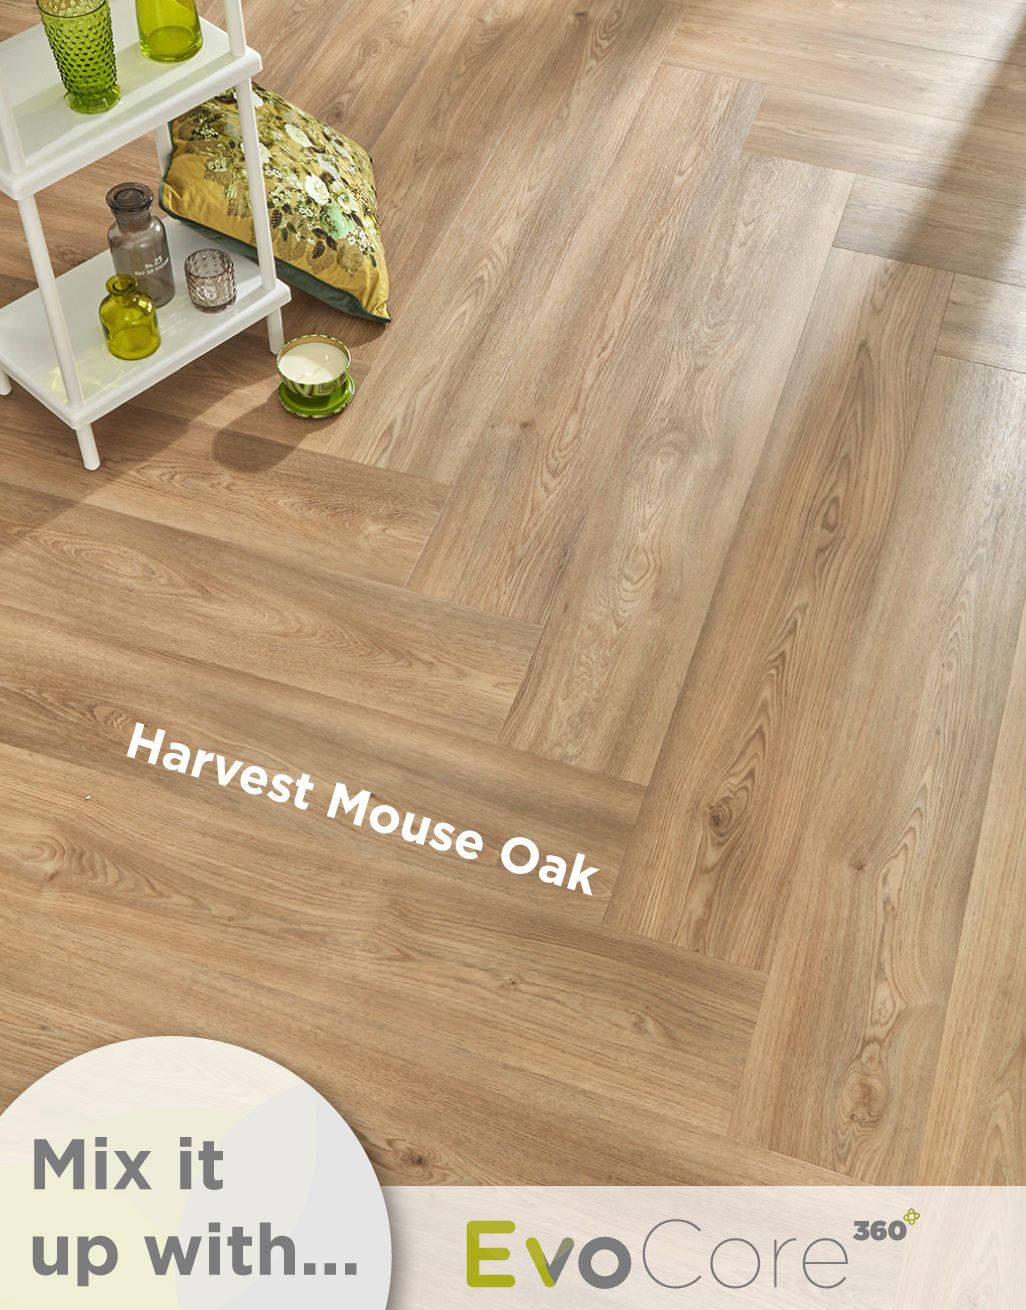 EvoCore 360 - Harvest Mouse Oak 8